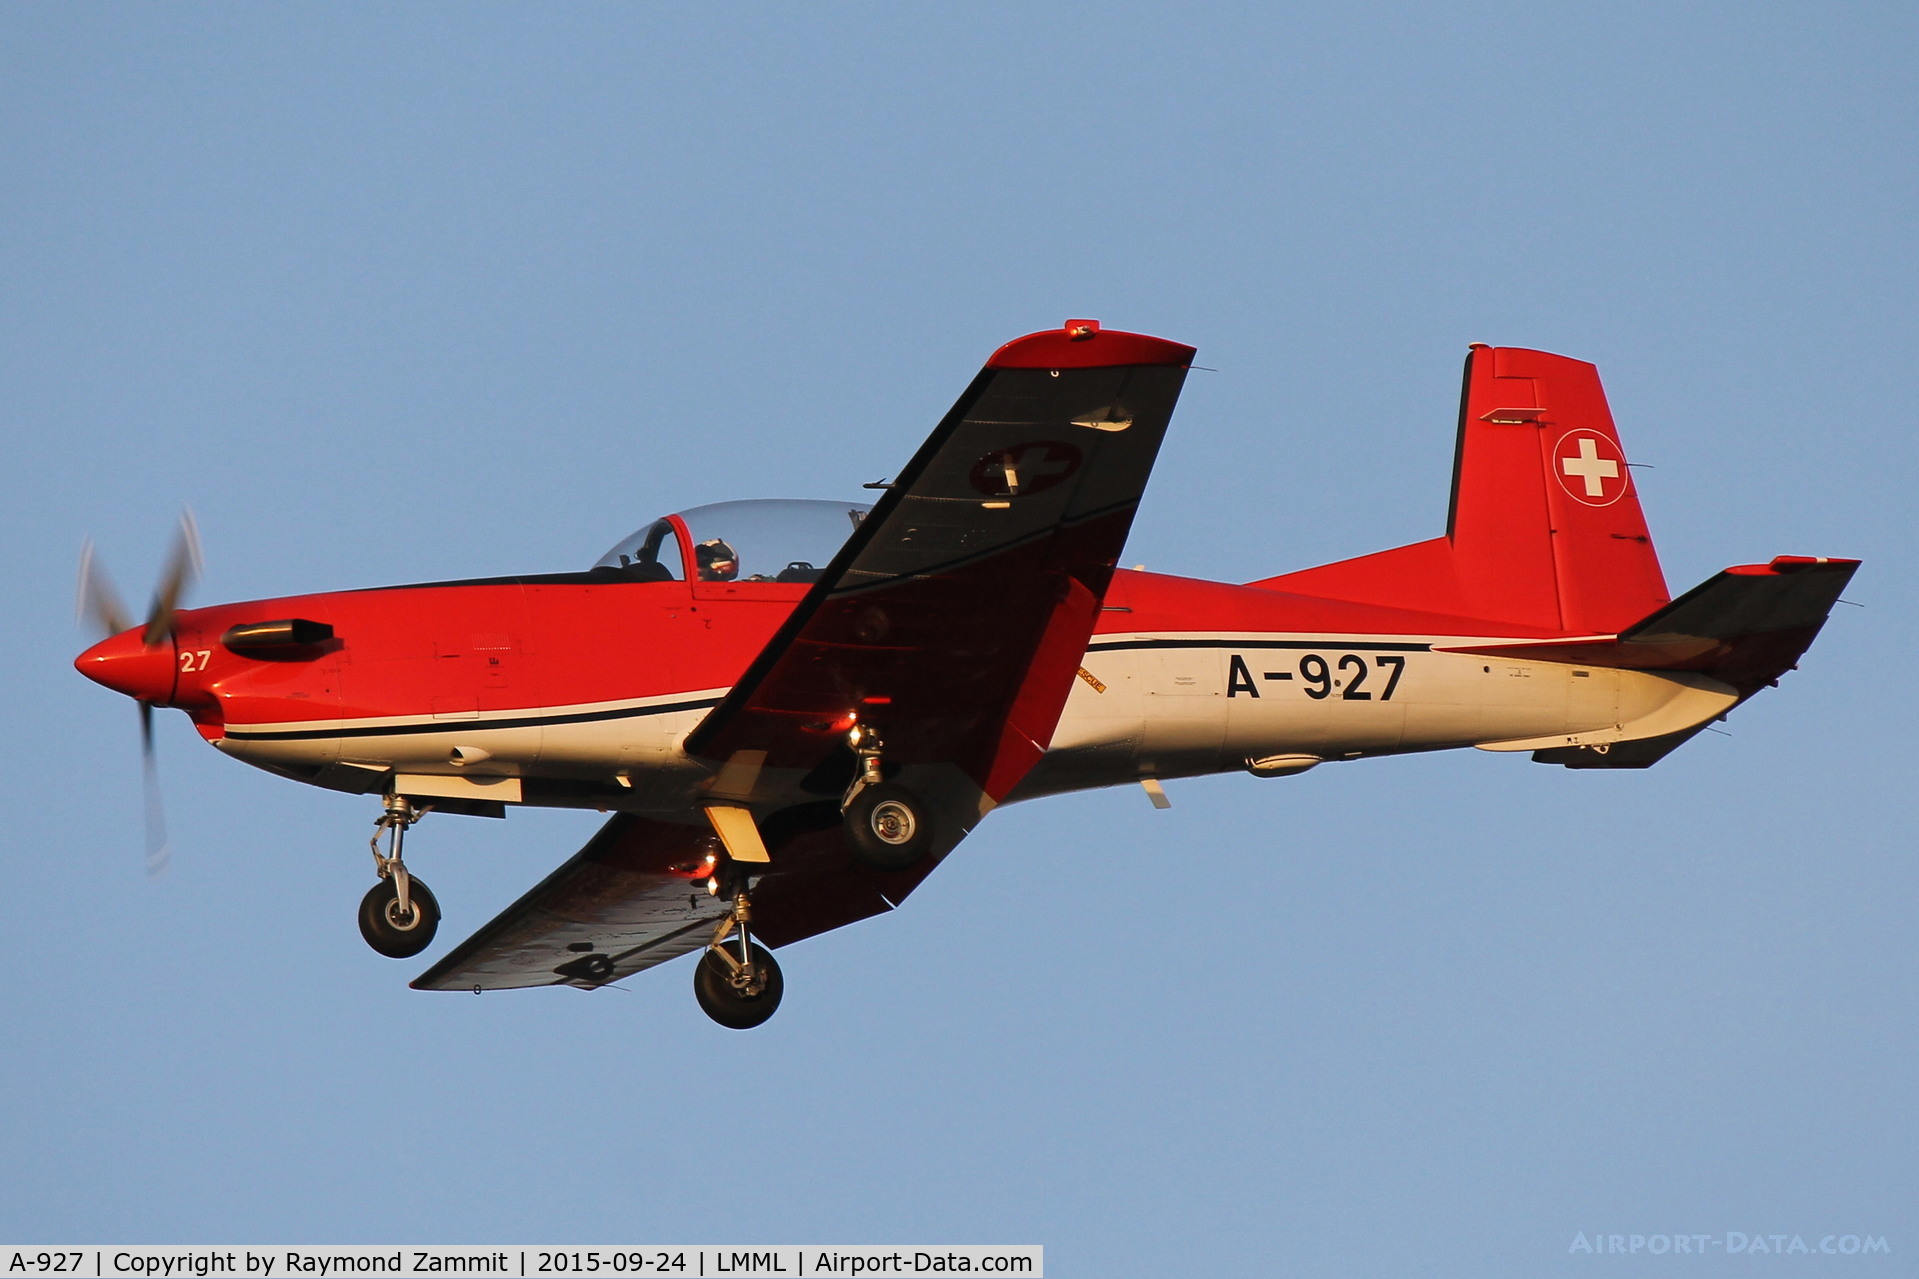 A-927, 1983 Pilatus PC-7 Turbo Trainer C/N 335, Pilatus PC-7 A-927 Swiss Air Force